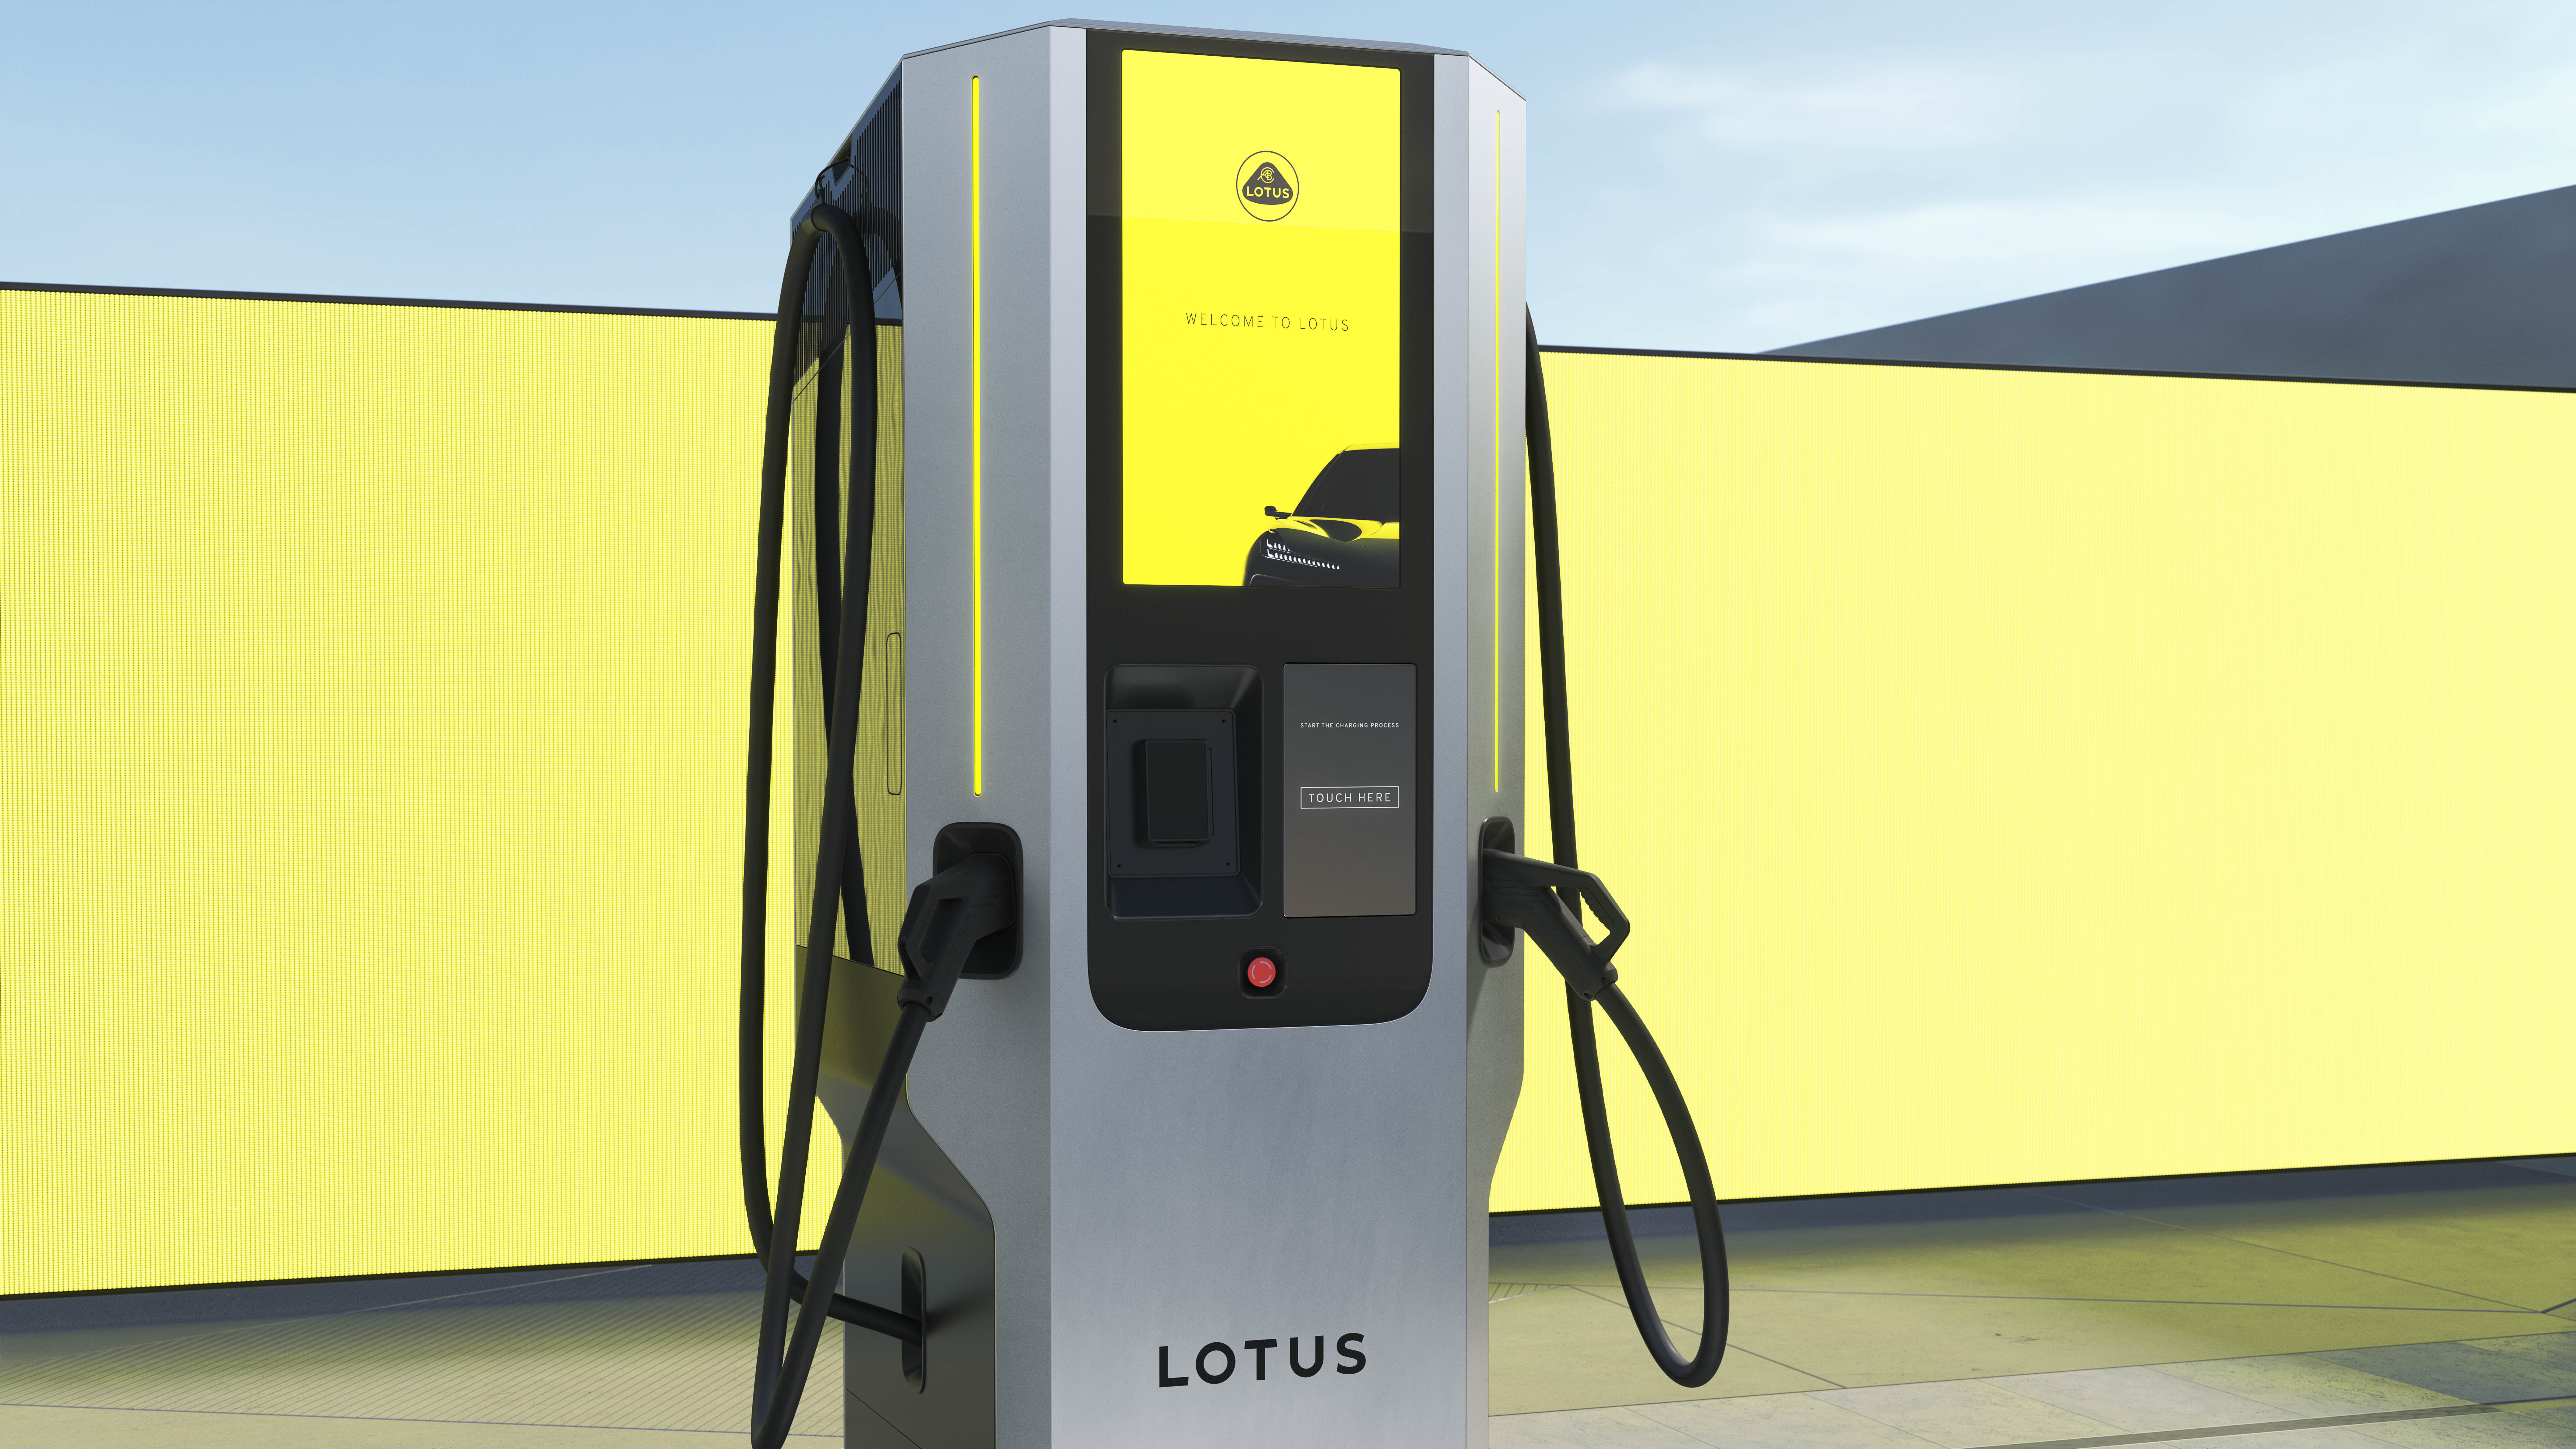 Lotus supercharger